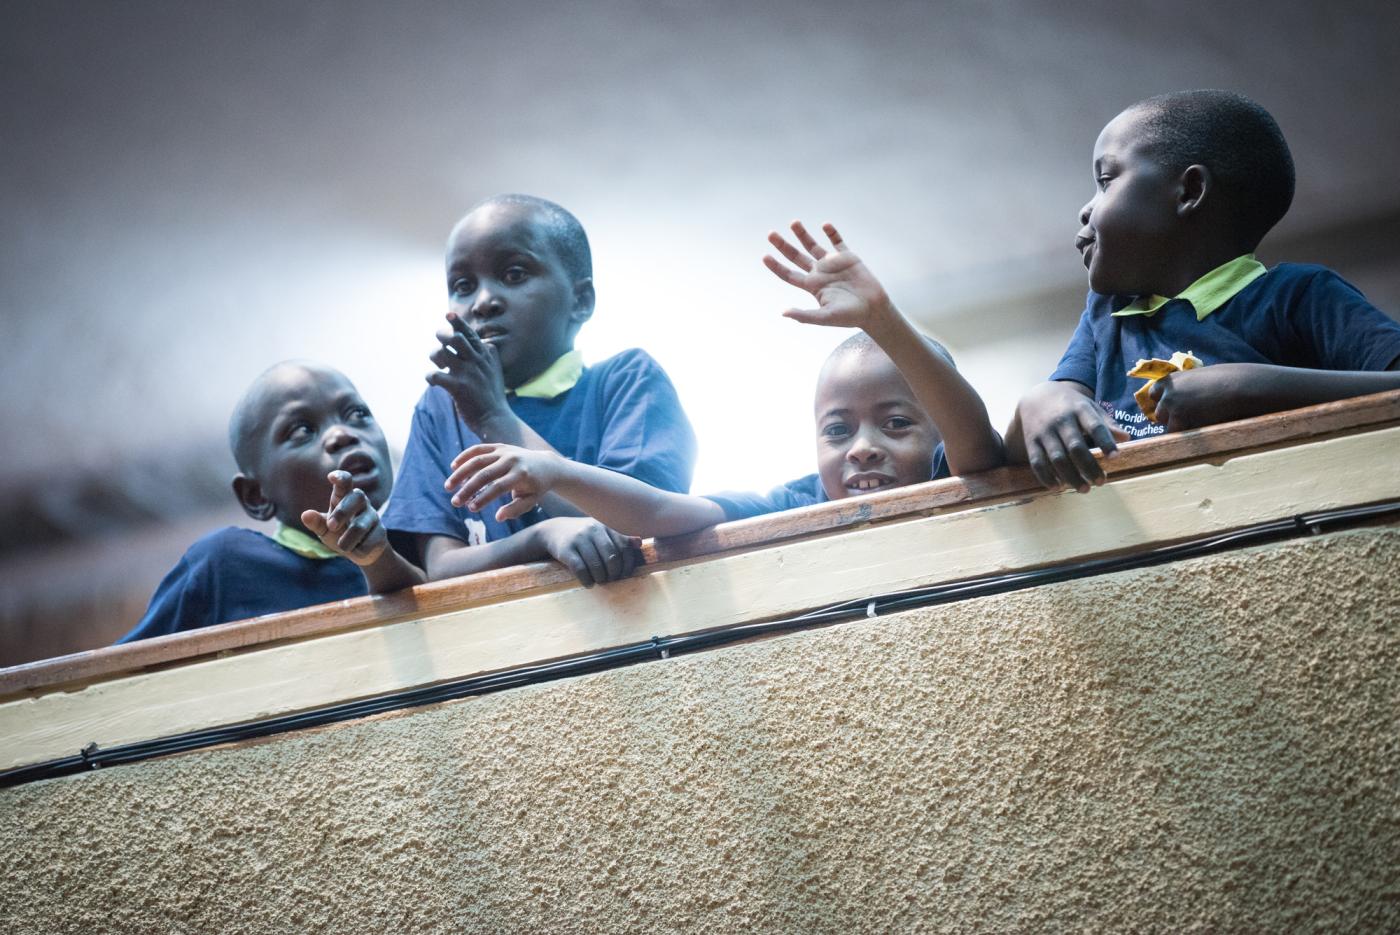 Children in Nairobi, Kenya